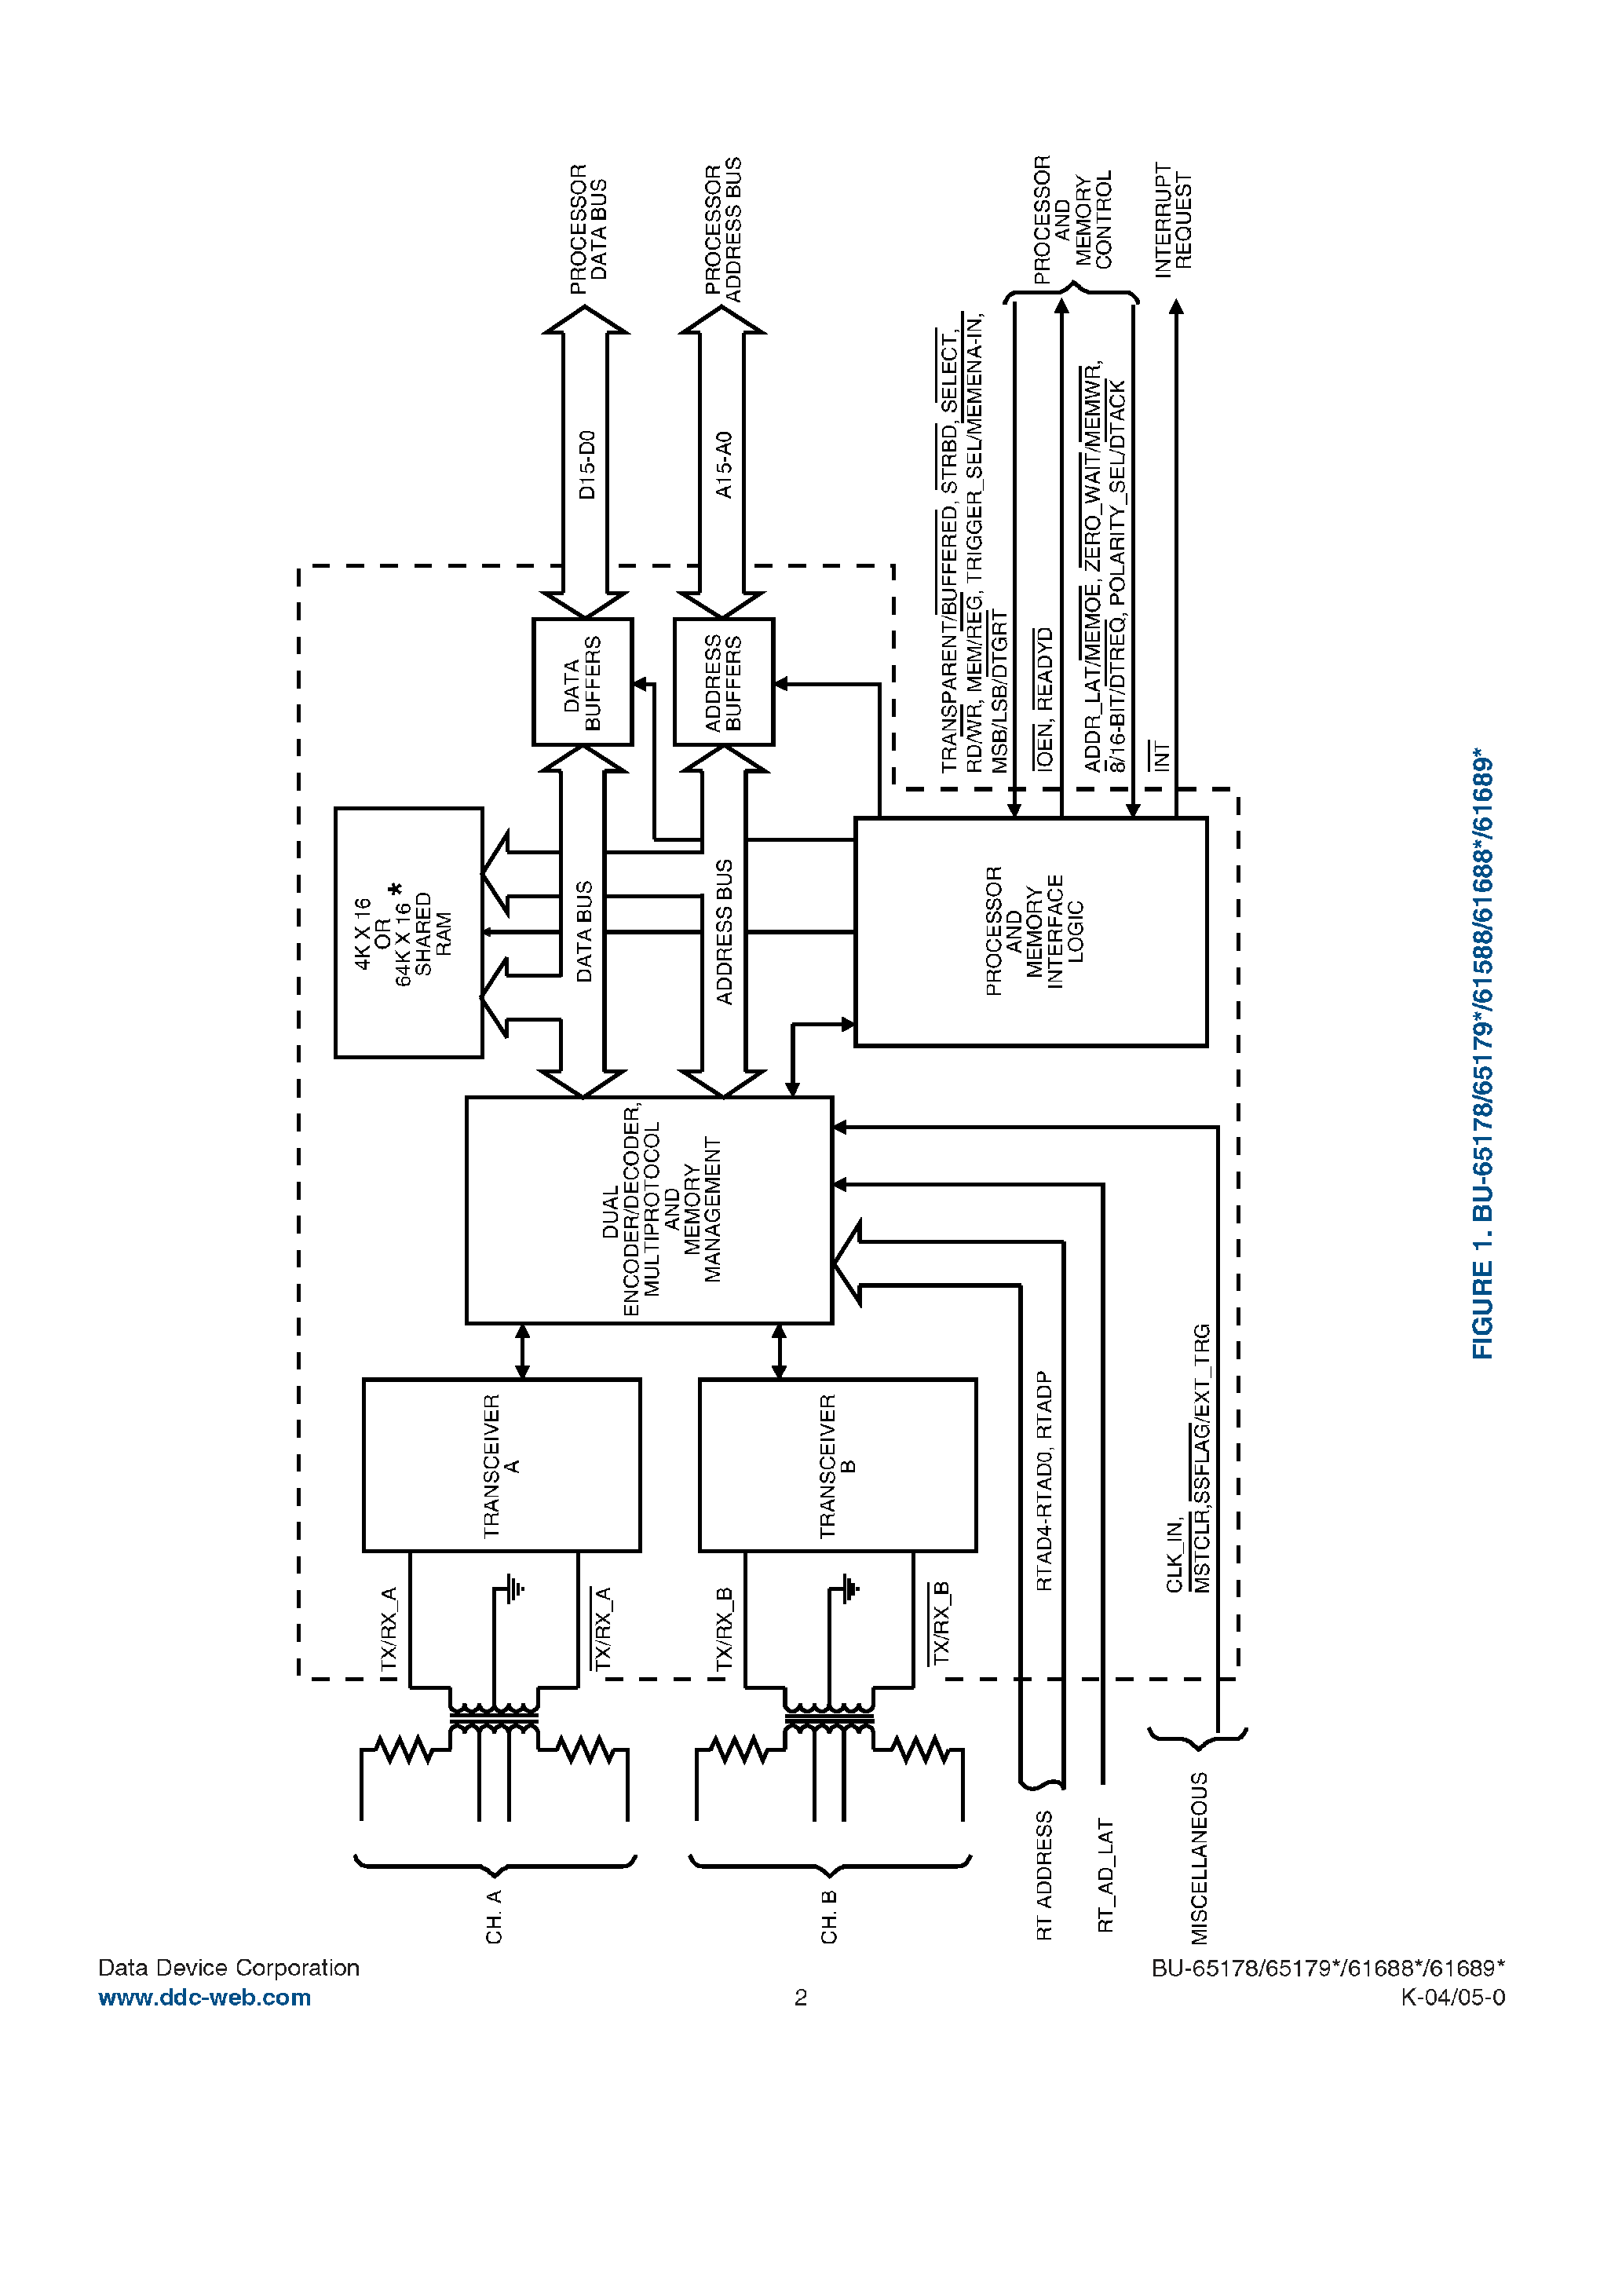 Даташит BU-61688 - Miniature Advanced Communication Engine and Mini-Ace Plus страница 2